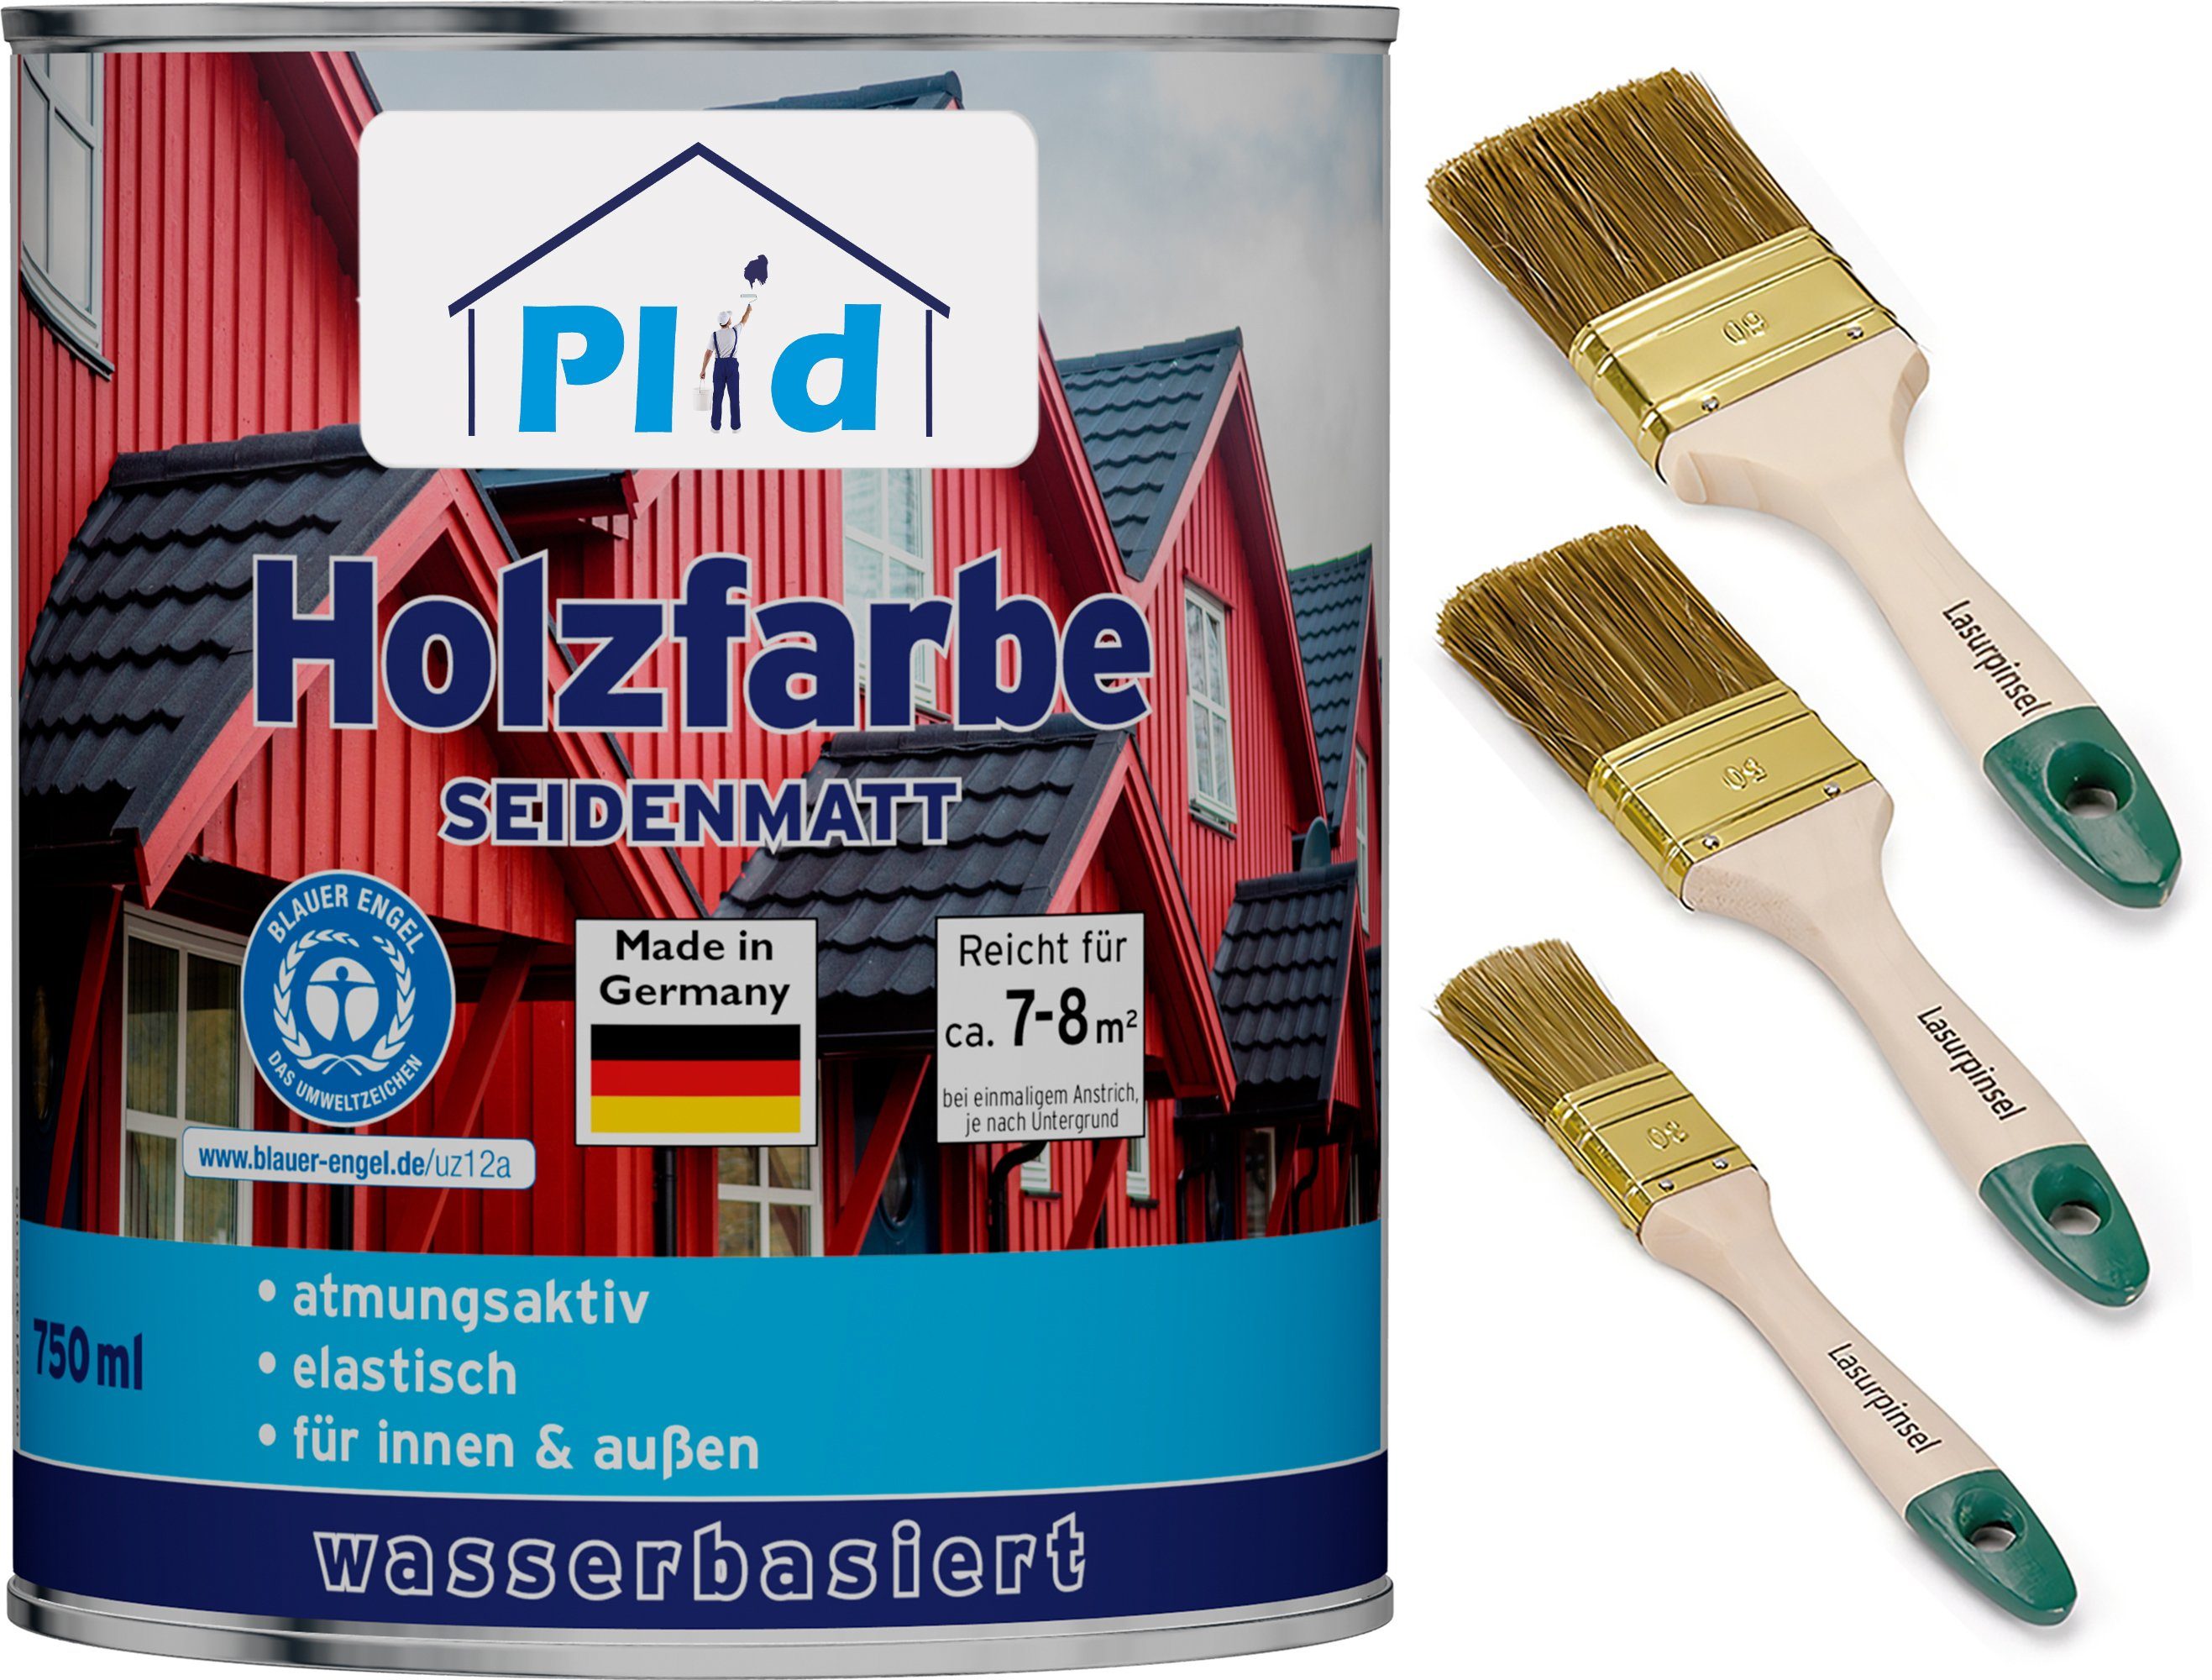 plid Holzlack Premium Holzfarbe Holzlack Farbe für Holz Pinsel, Schnelltrocknend, verarbeitungsfertig Weiß | Holzlacke